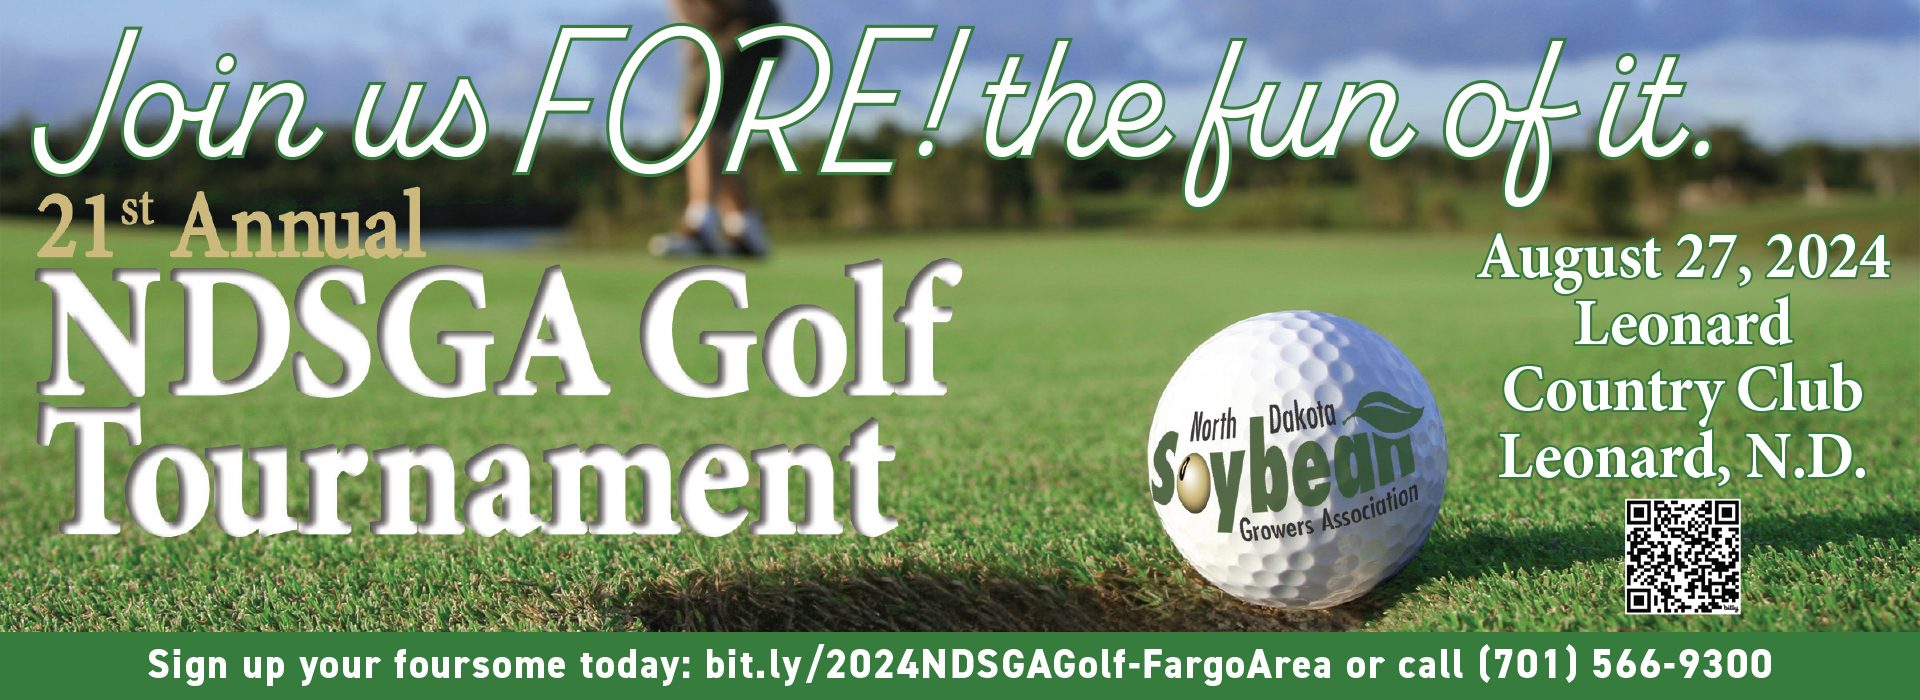 NDSGA-Golf-Tournament-Web-Graphic-Leonard - August 27